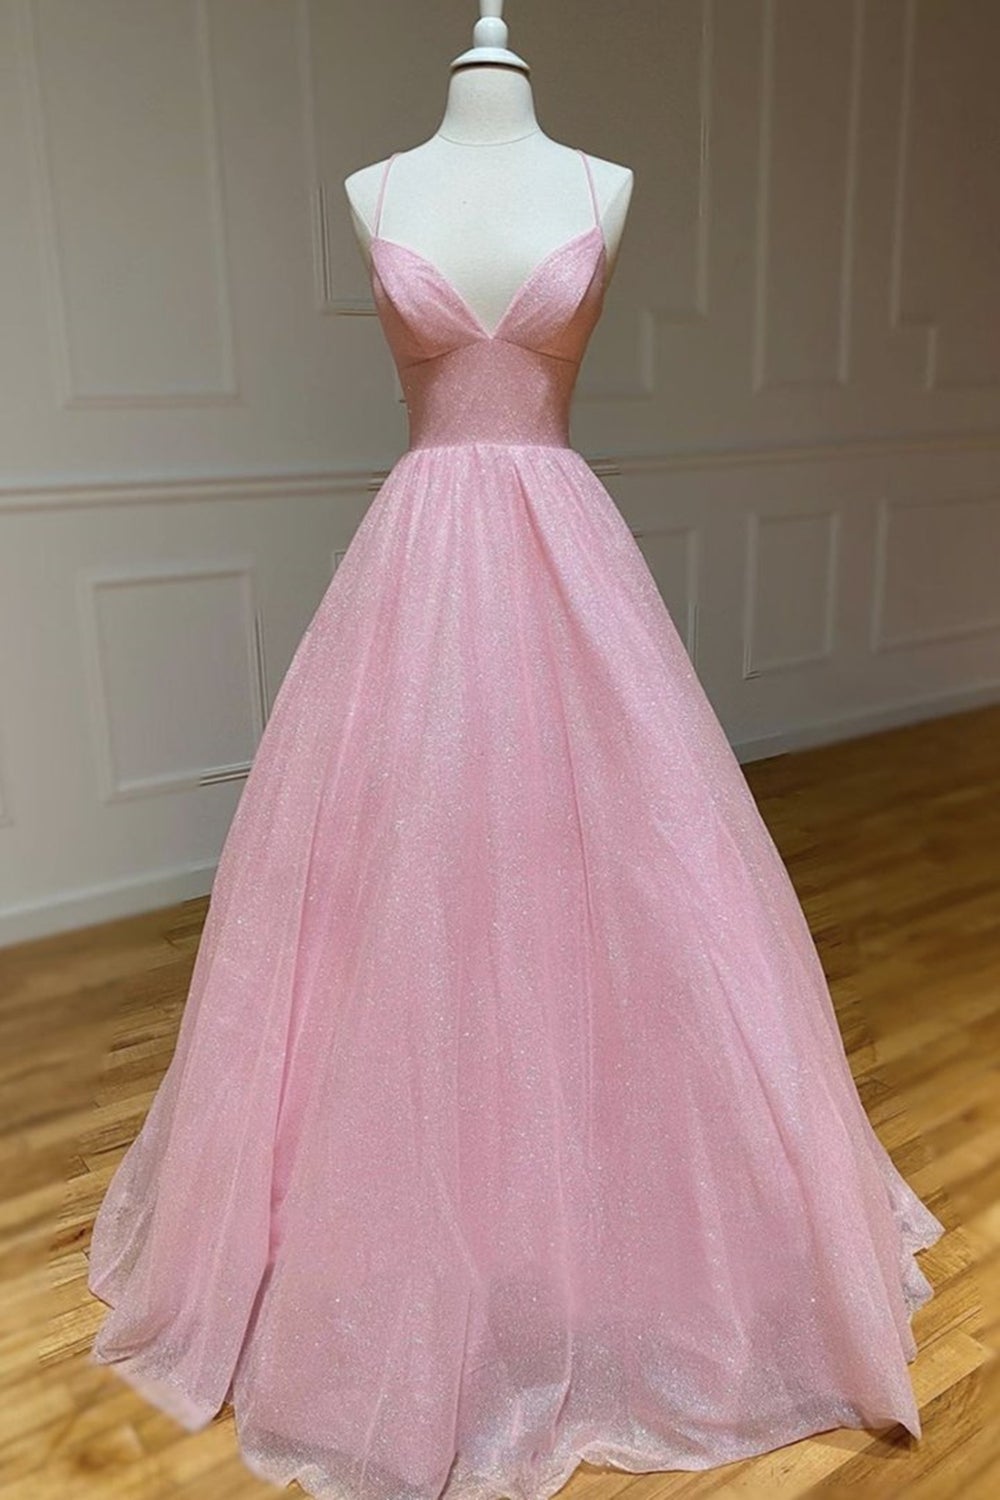 Shiny V Neck Backless Pink Long Prom Dress Outfits For Girls, Formal Graduation Evening Dresses